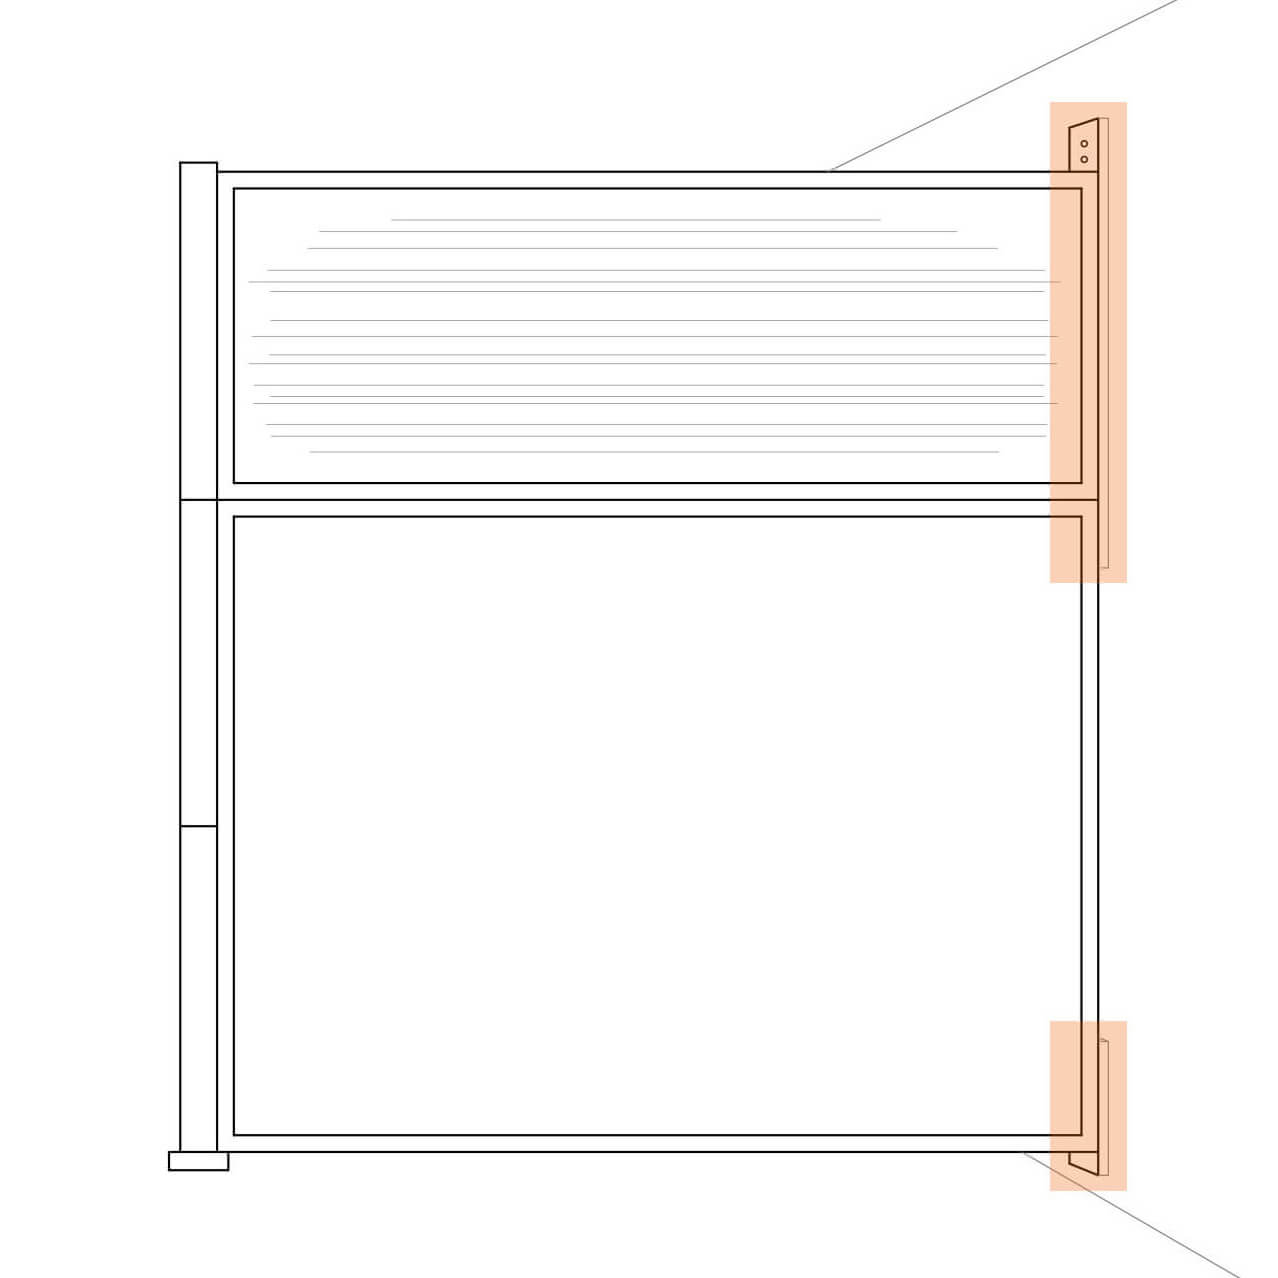 Modular panels wall bracket placement